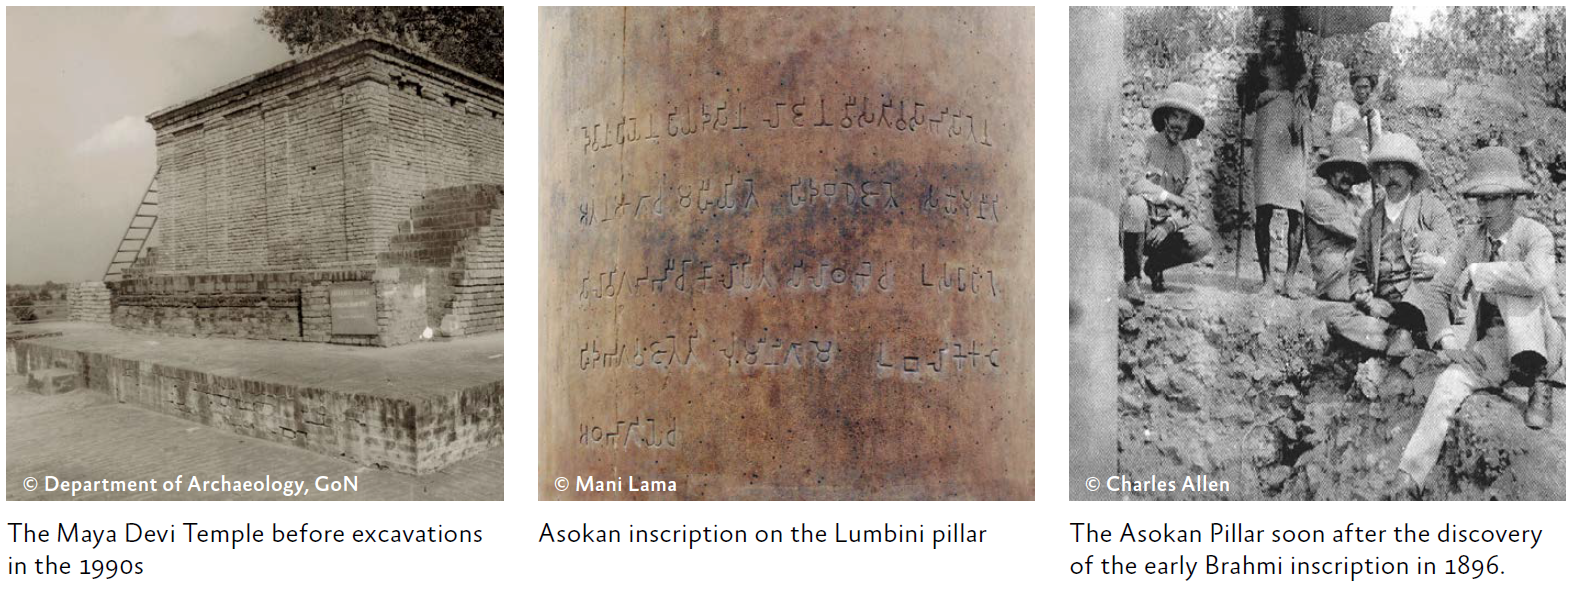 The Maya Devi Temple before excavations in 1990s; Asokan inscription on the Lumbini Pillar; The Asokan Pillar in 1896